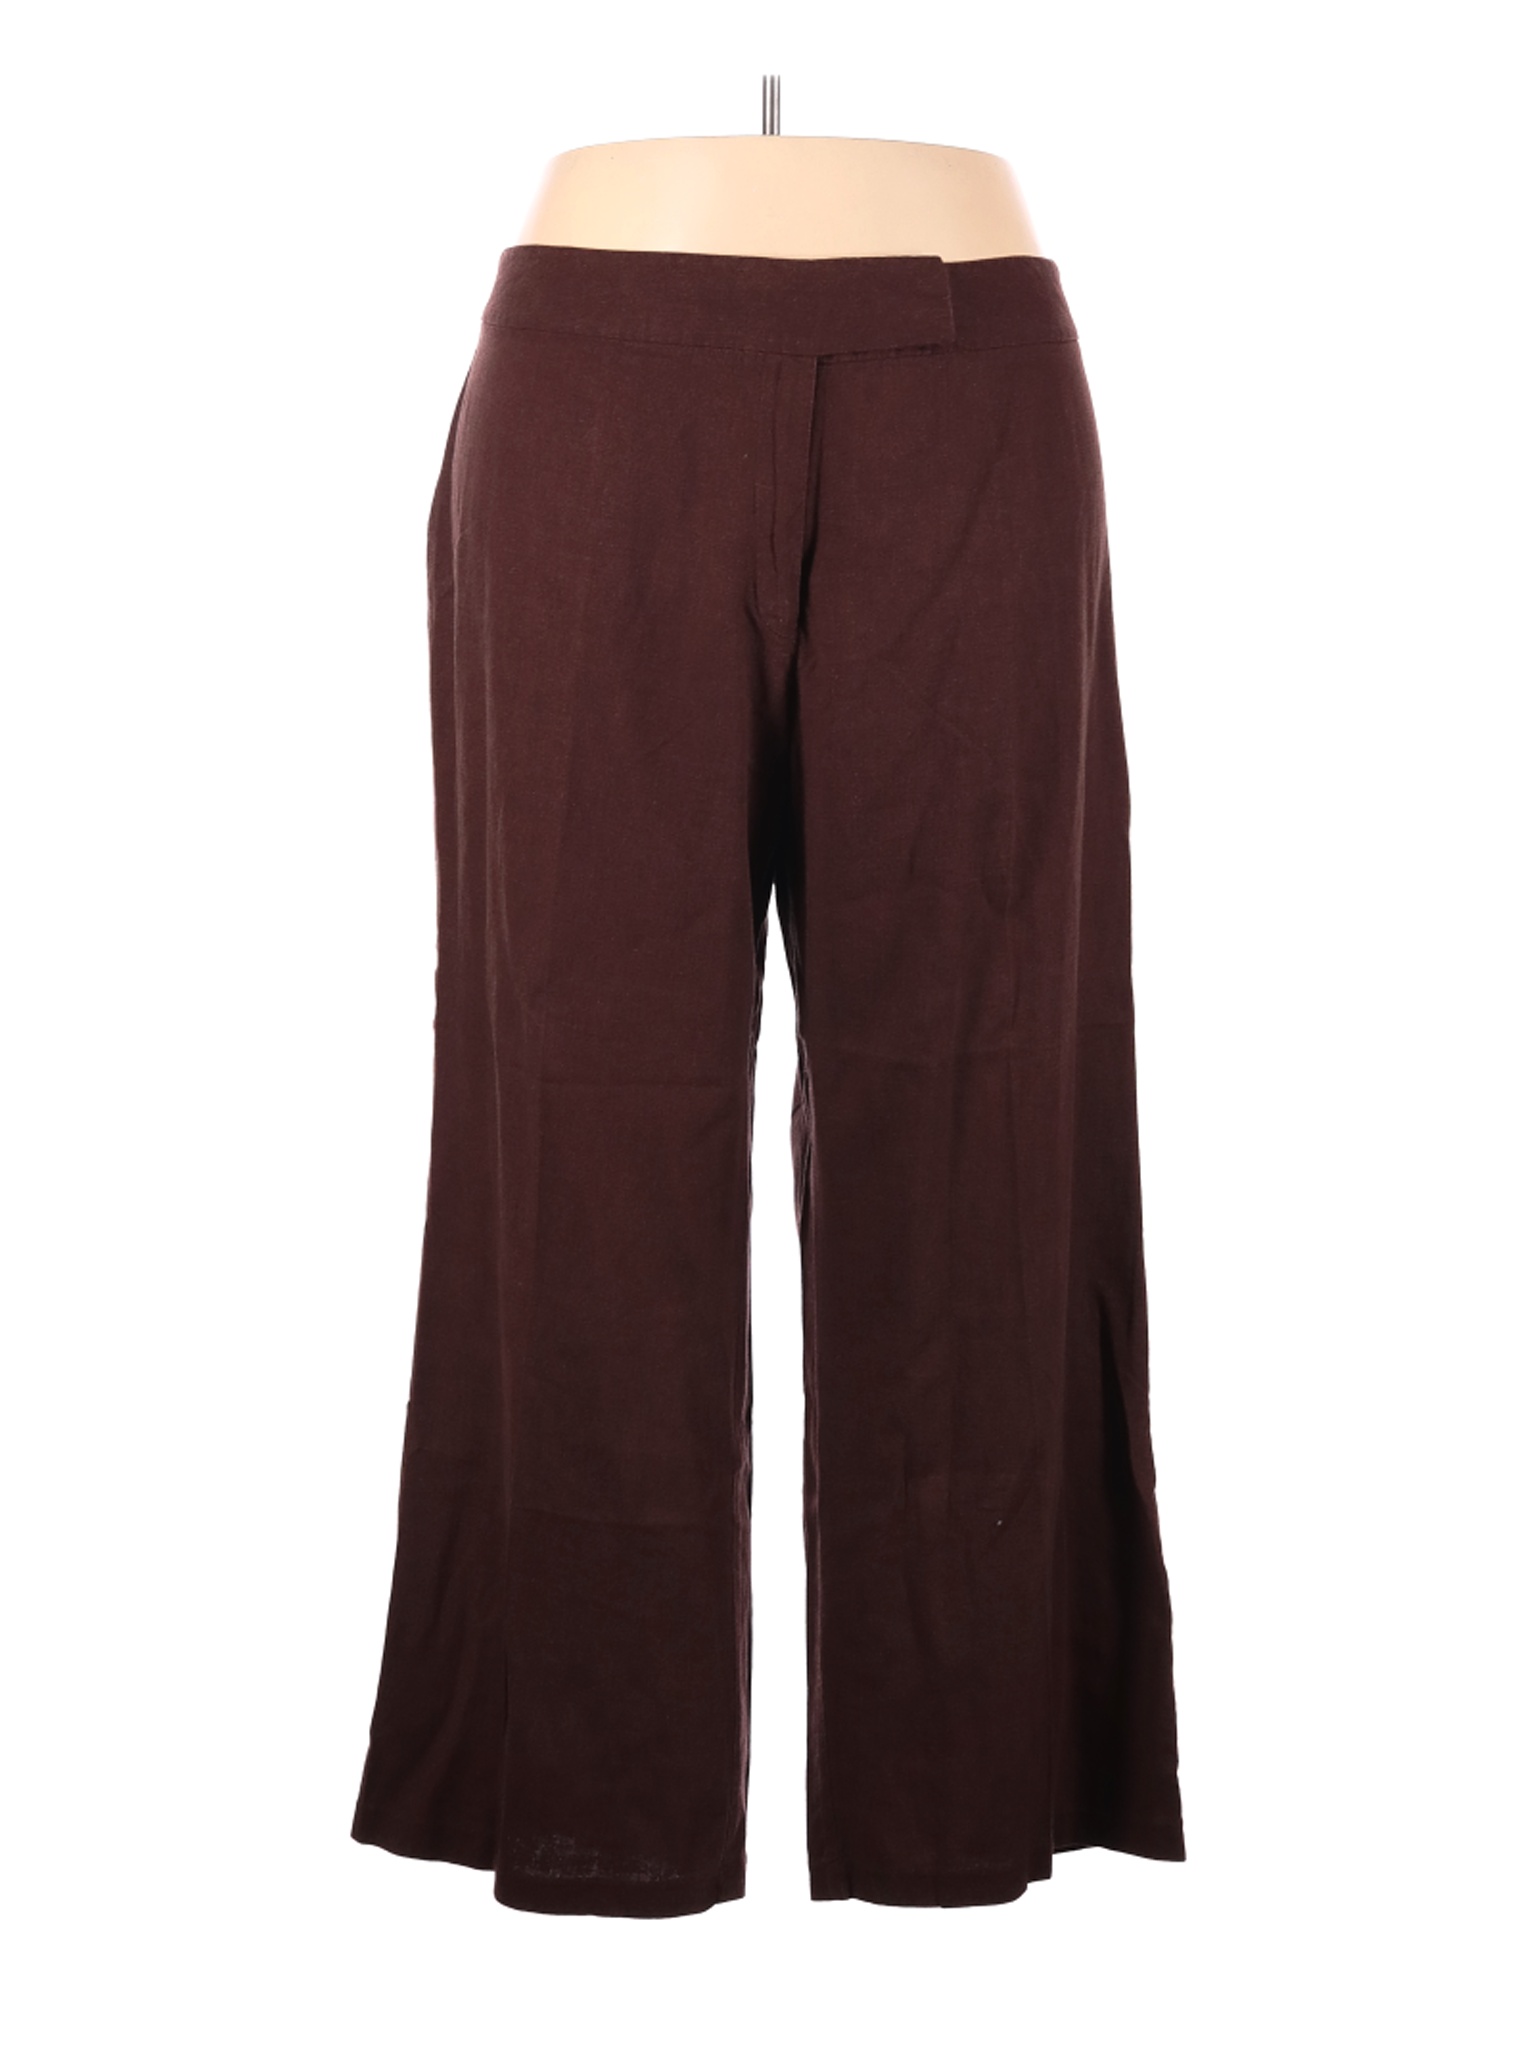 D.F.A. New York Women Brown Linen Pants 24 Plus | eBay